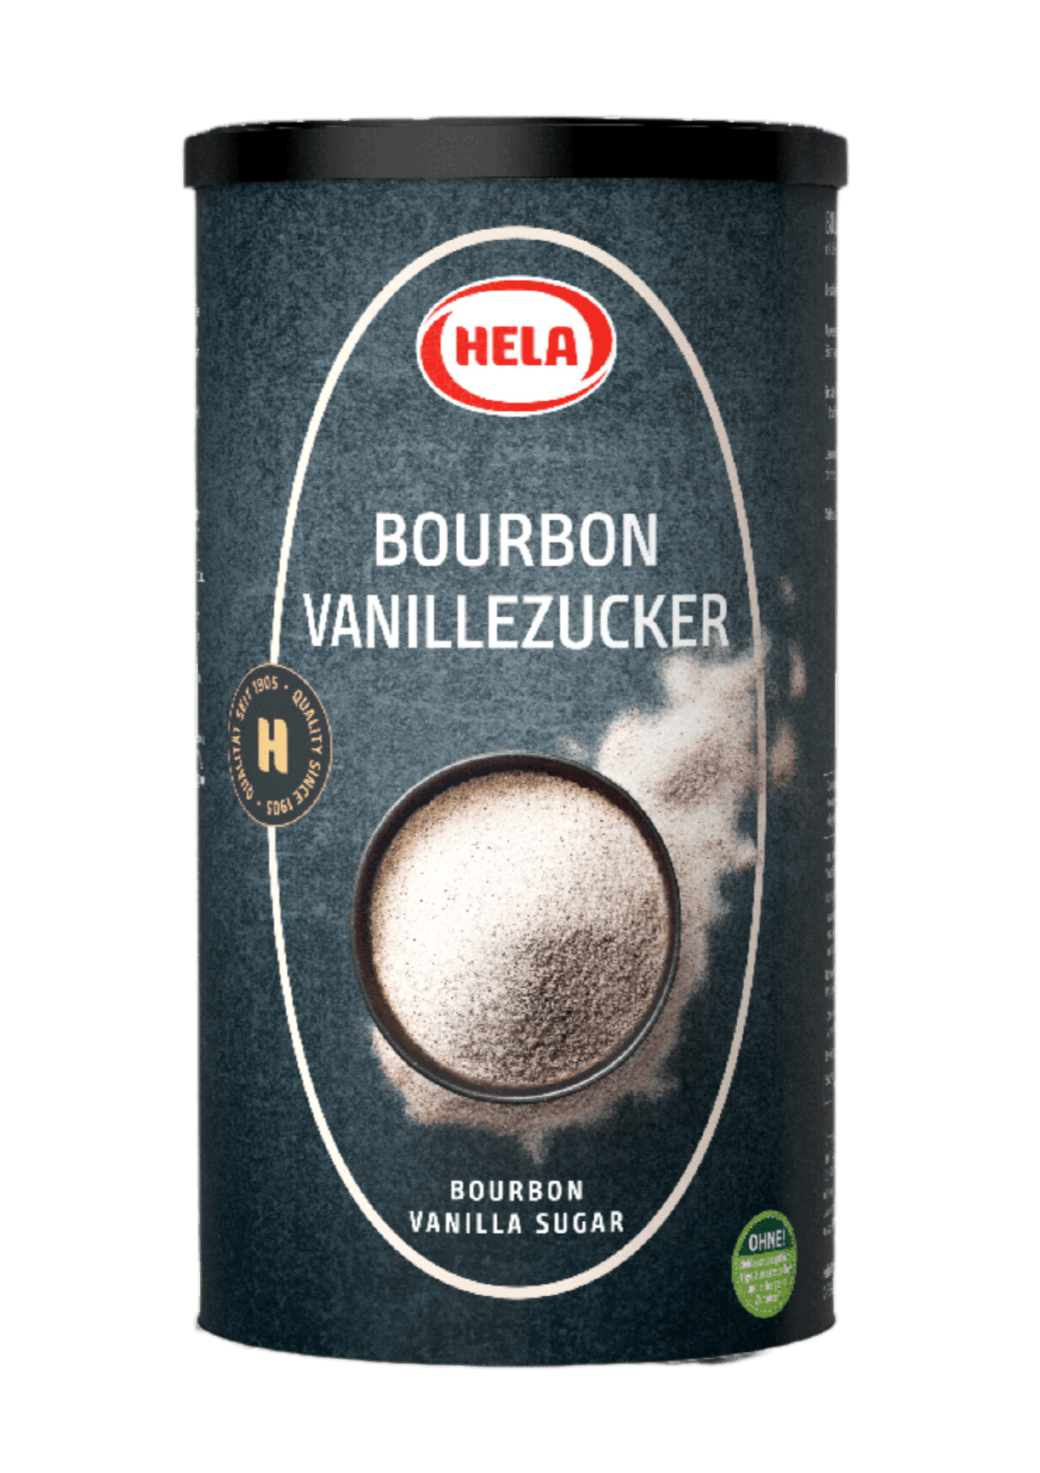 Hela Bourbon Vanillezucker Kulinarik HELA Gewürze 